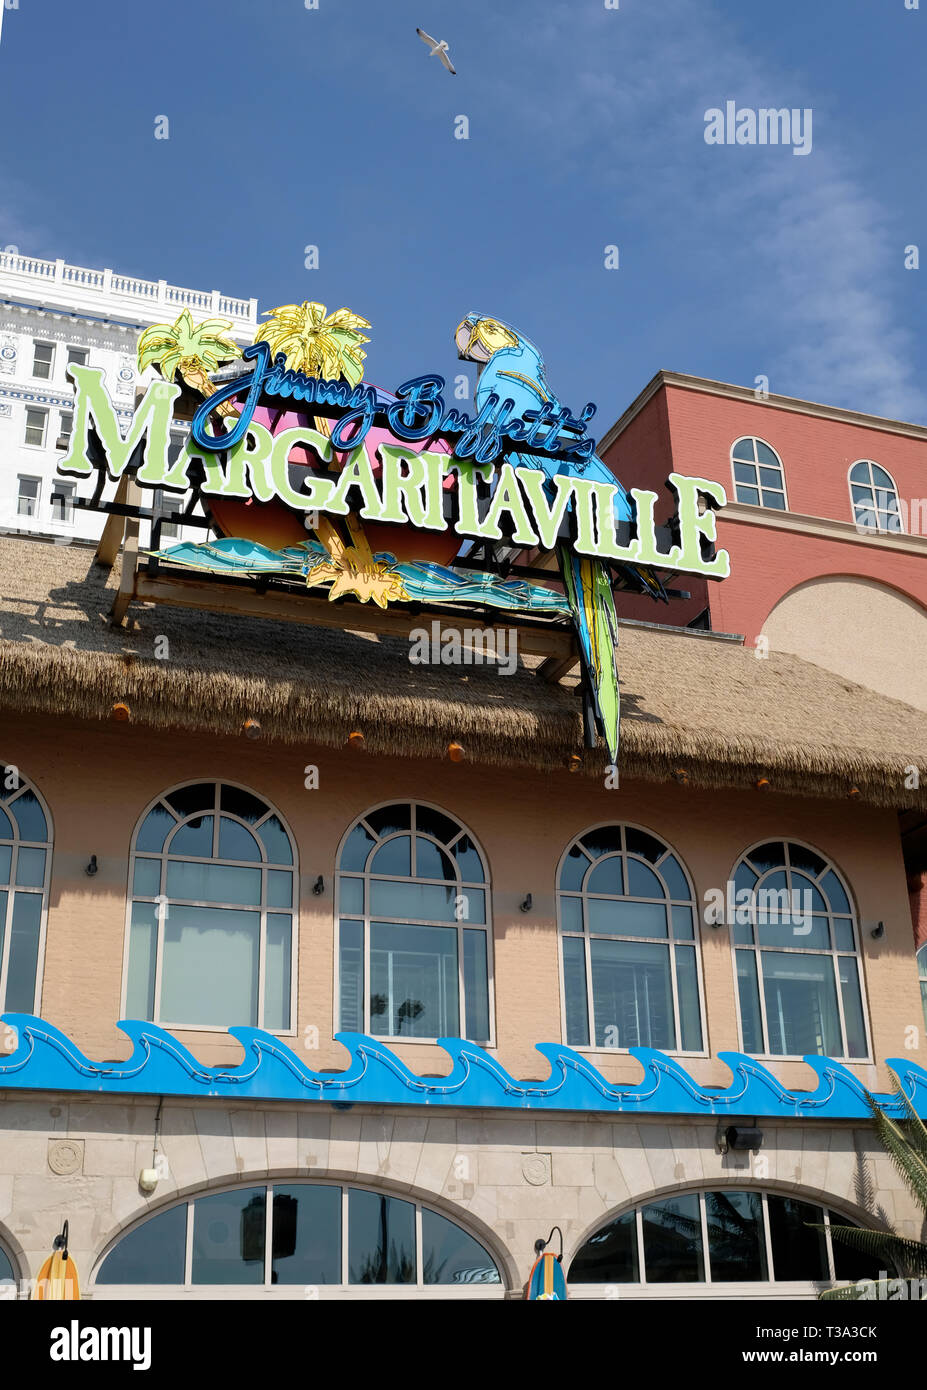 Margaritaville in Atlantic City, New Jersey Stock Photo - Alamy